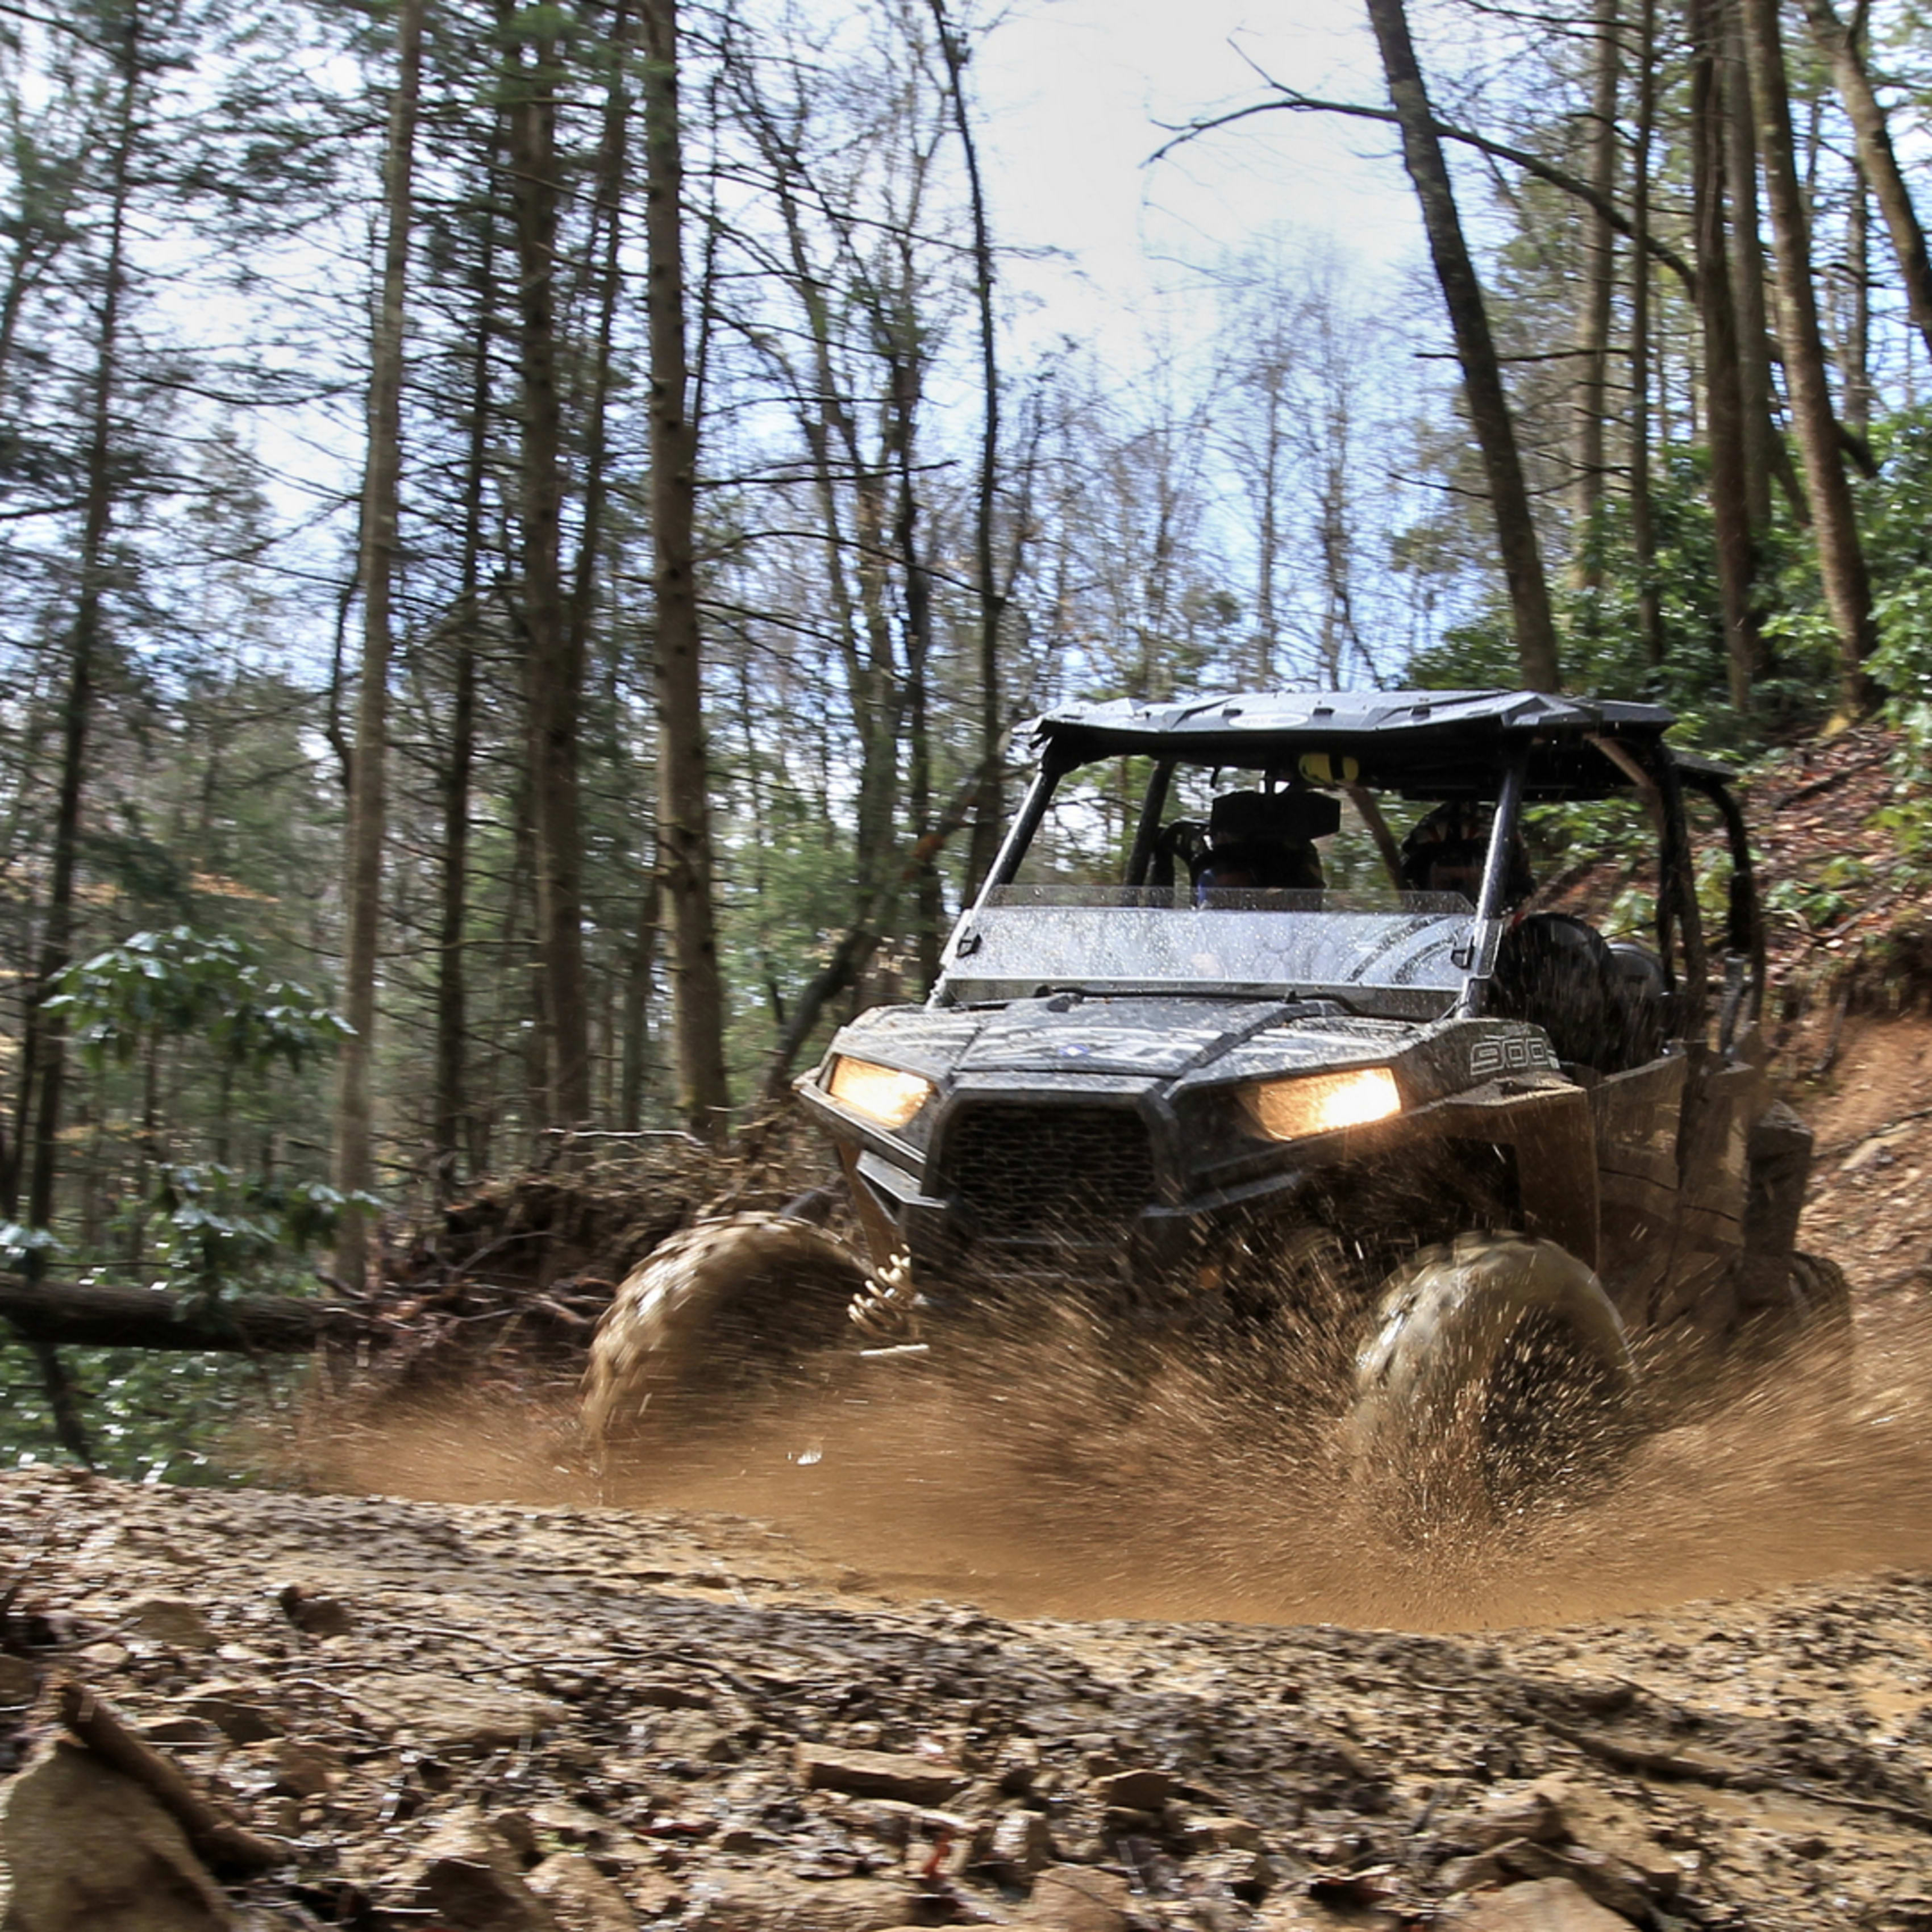 Polaris RZR driving through mud